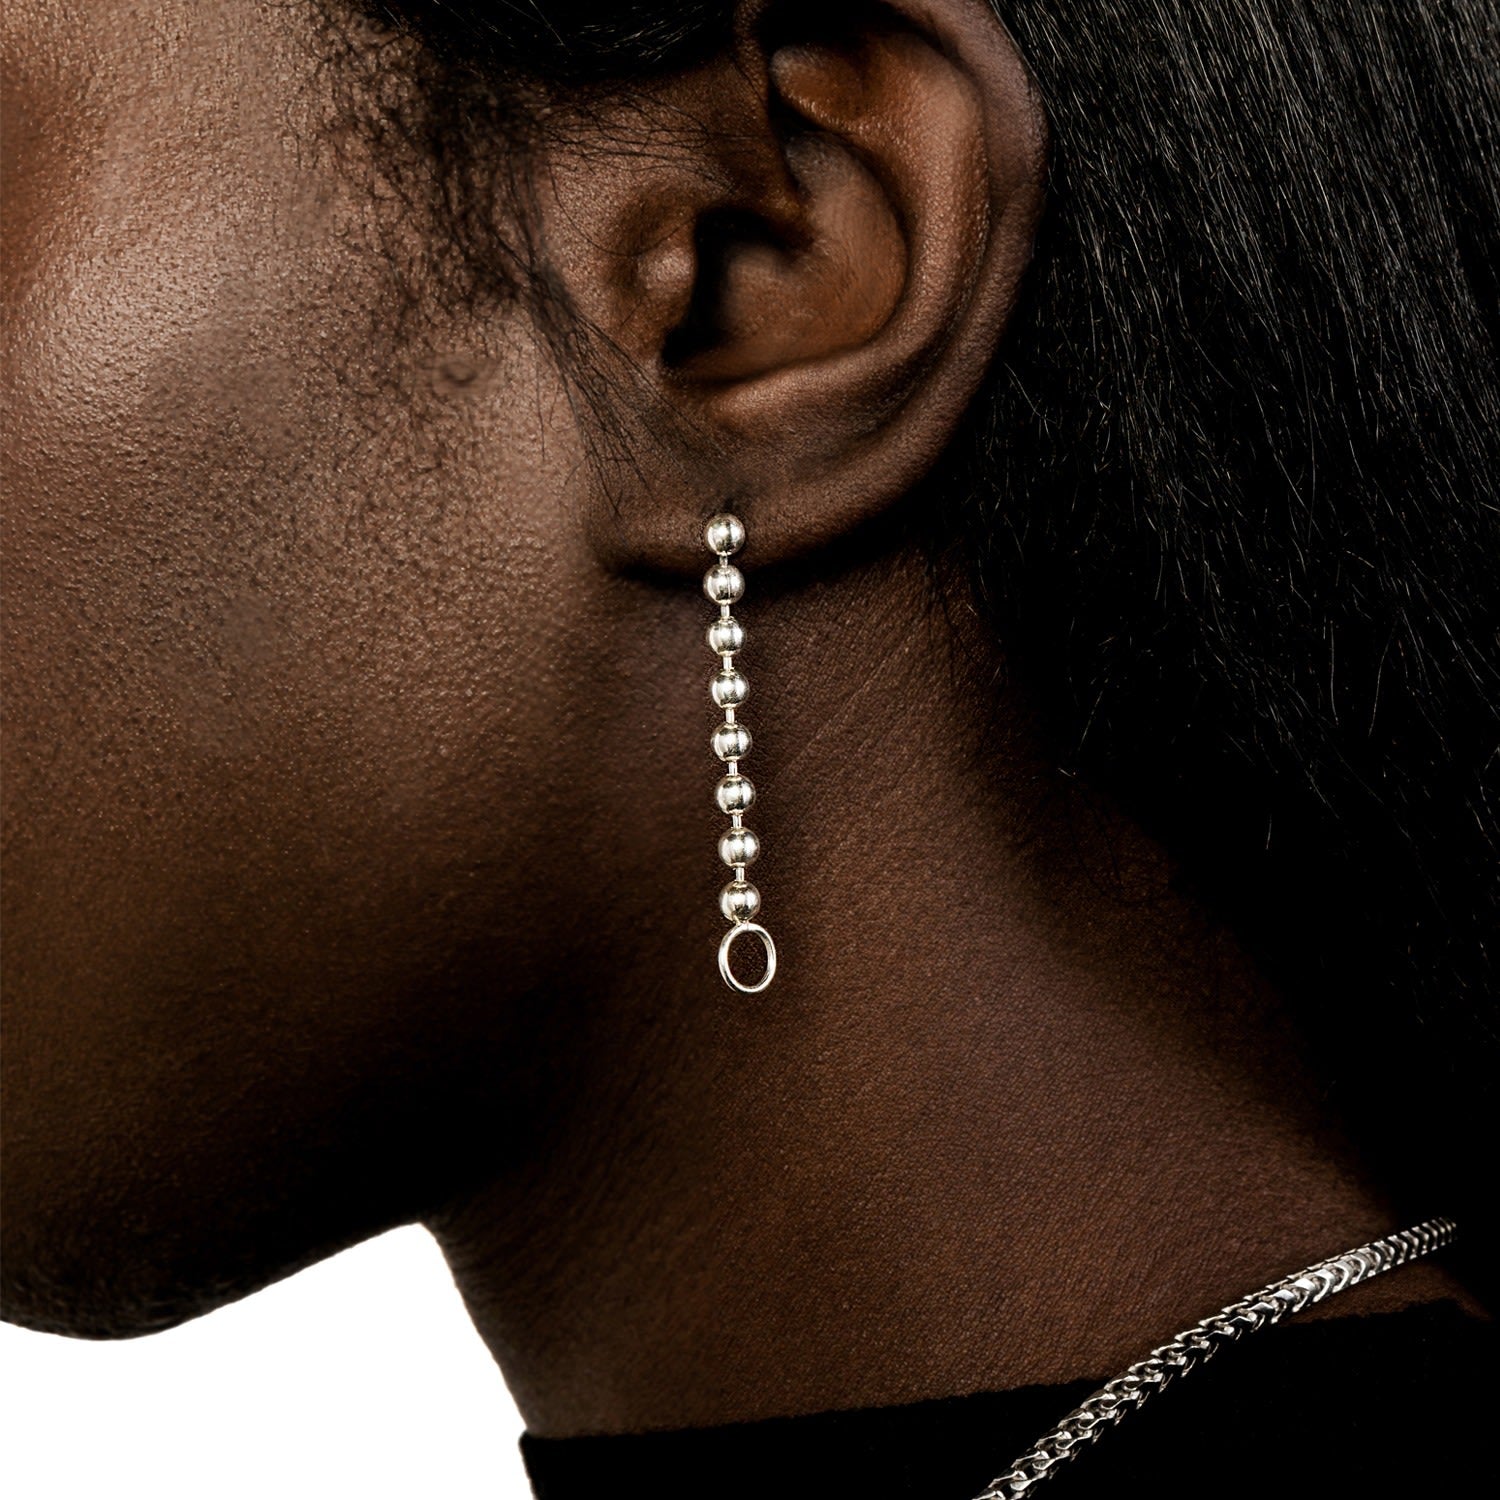 Big Beads Chain Earring w/ O-ring Hook